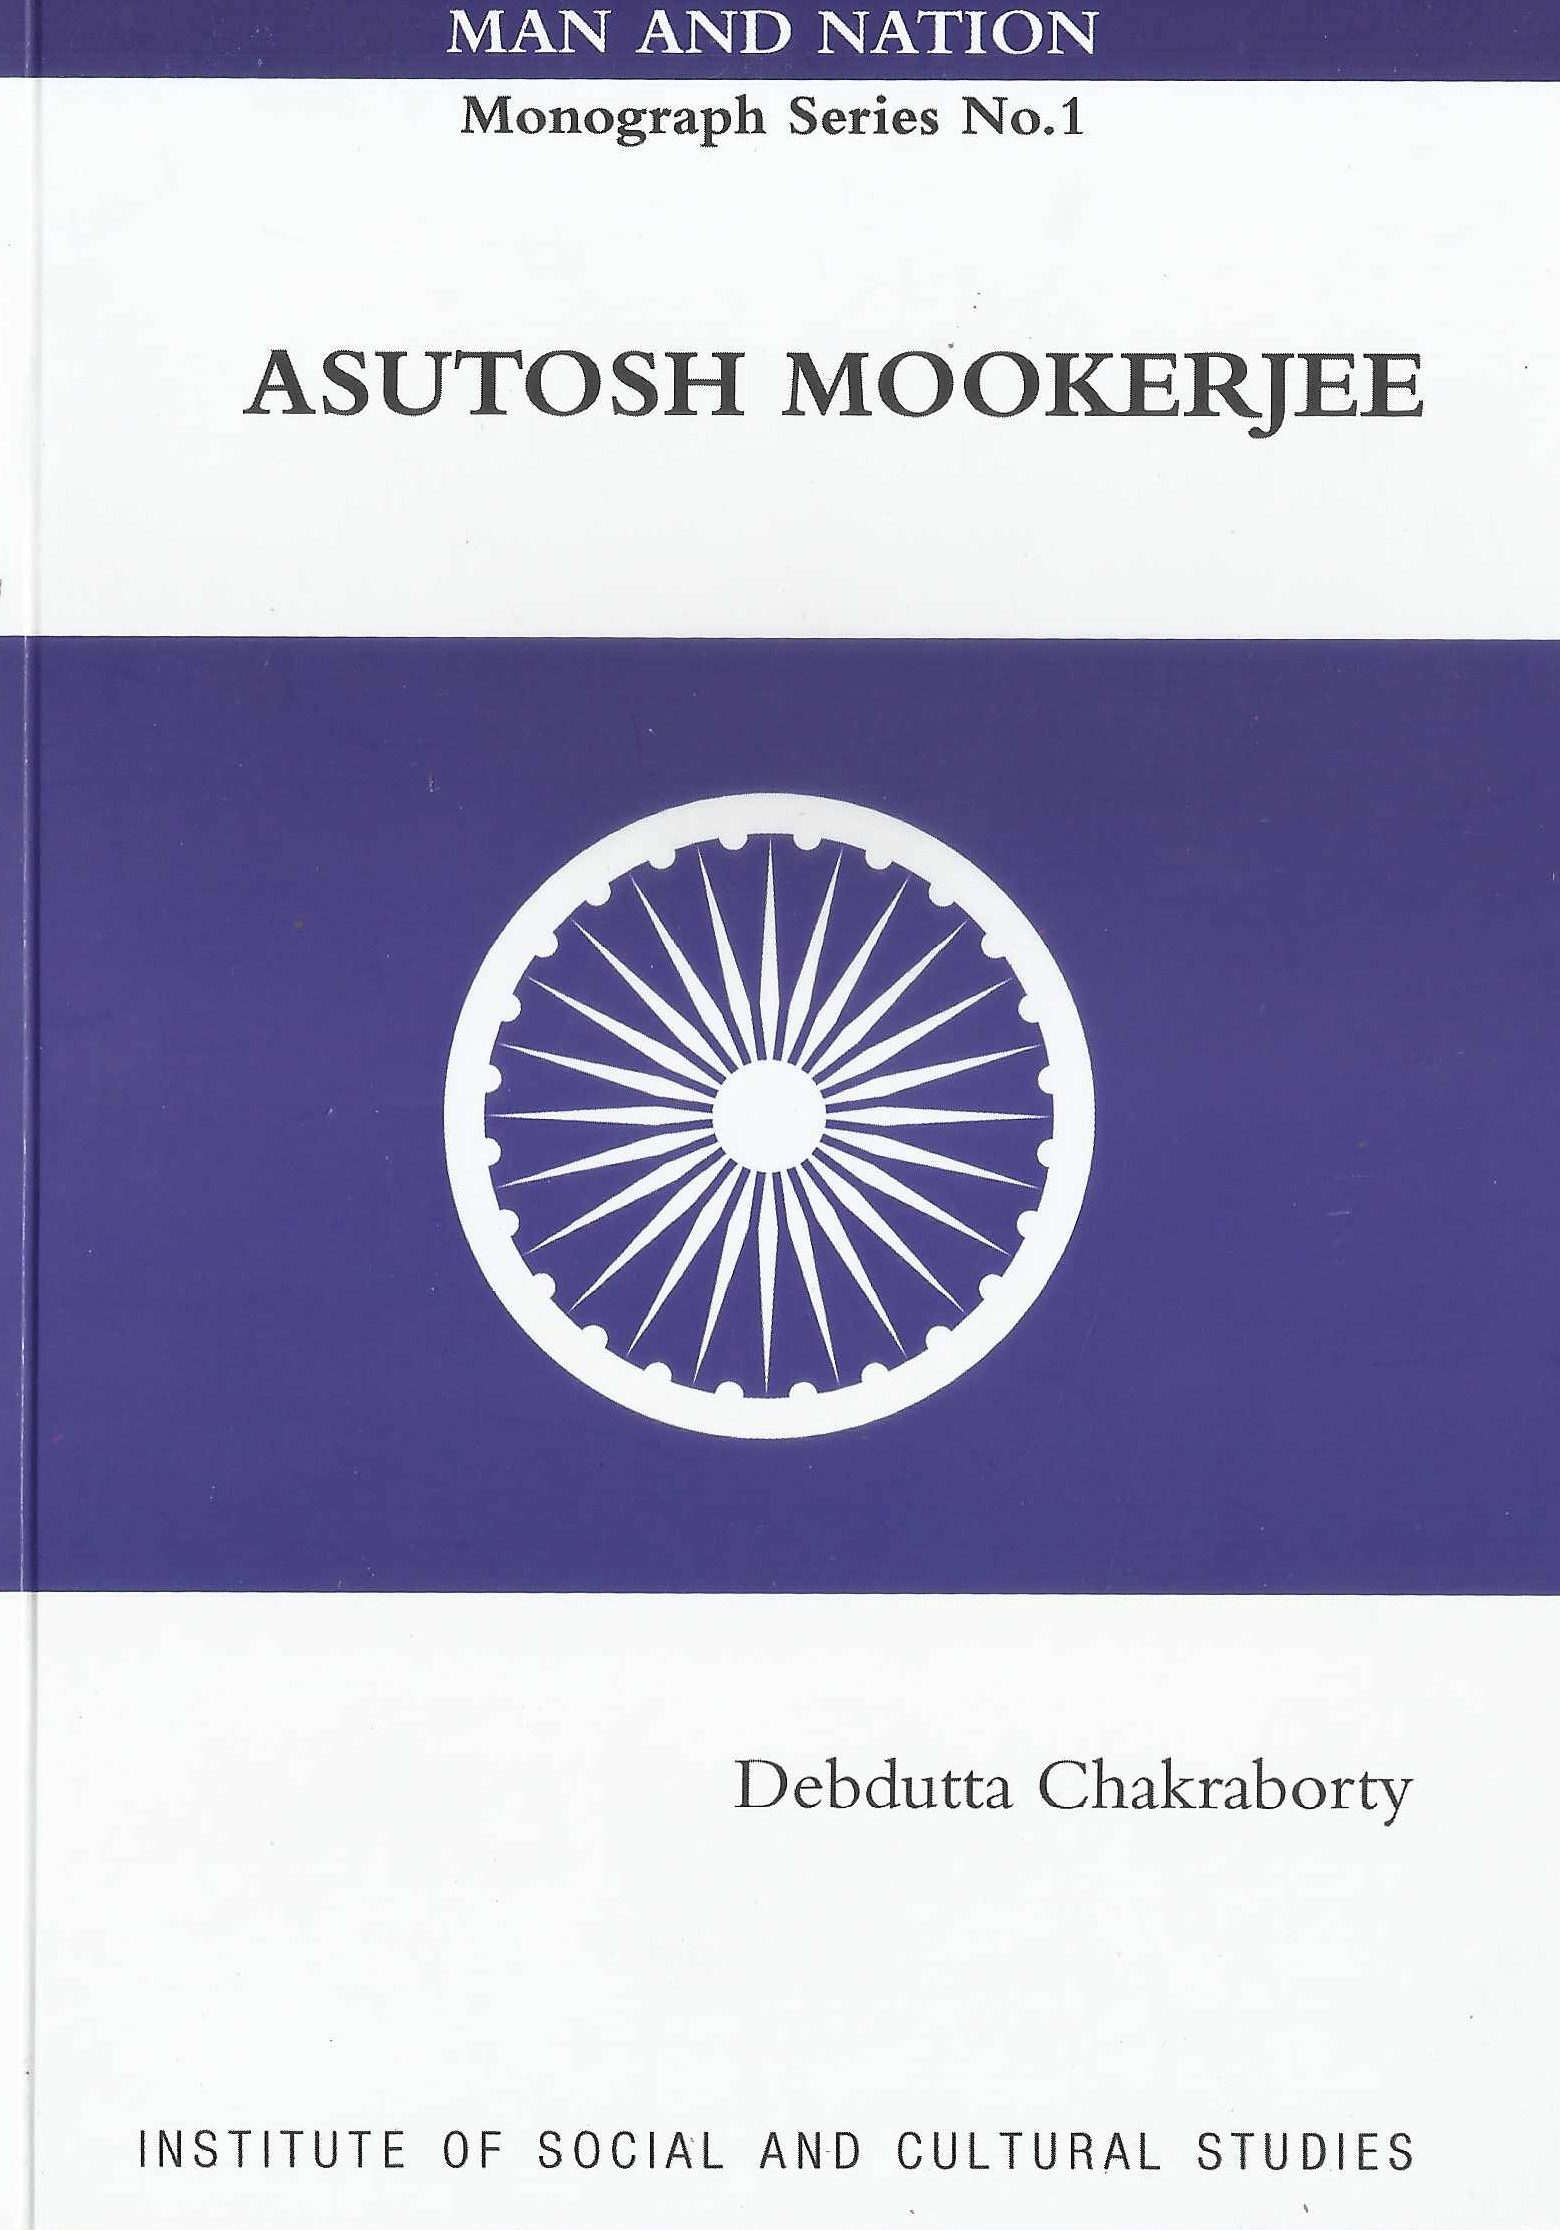 Man and Nation Monograph Series- Asutosh Mookerjee